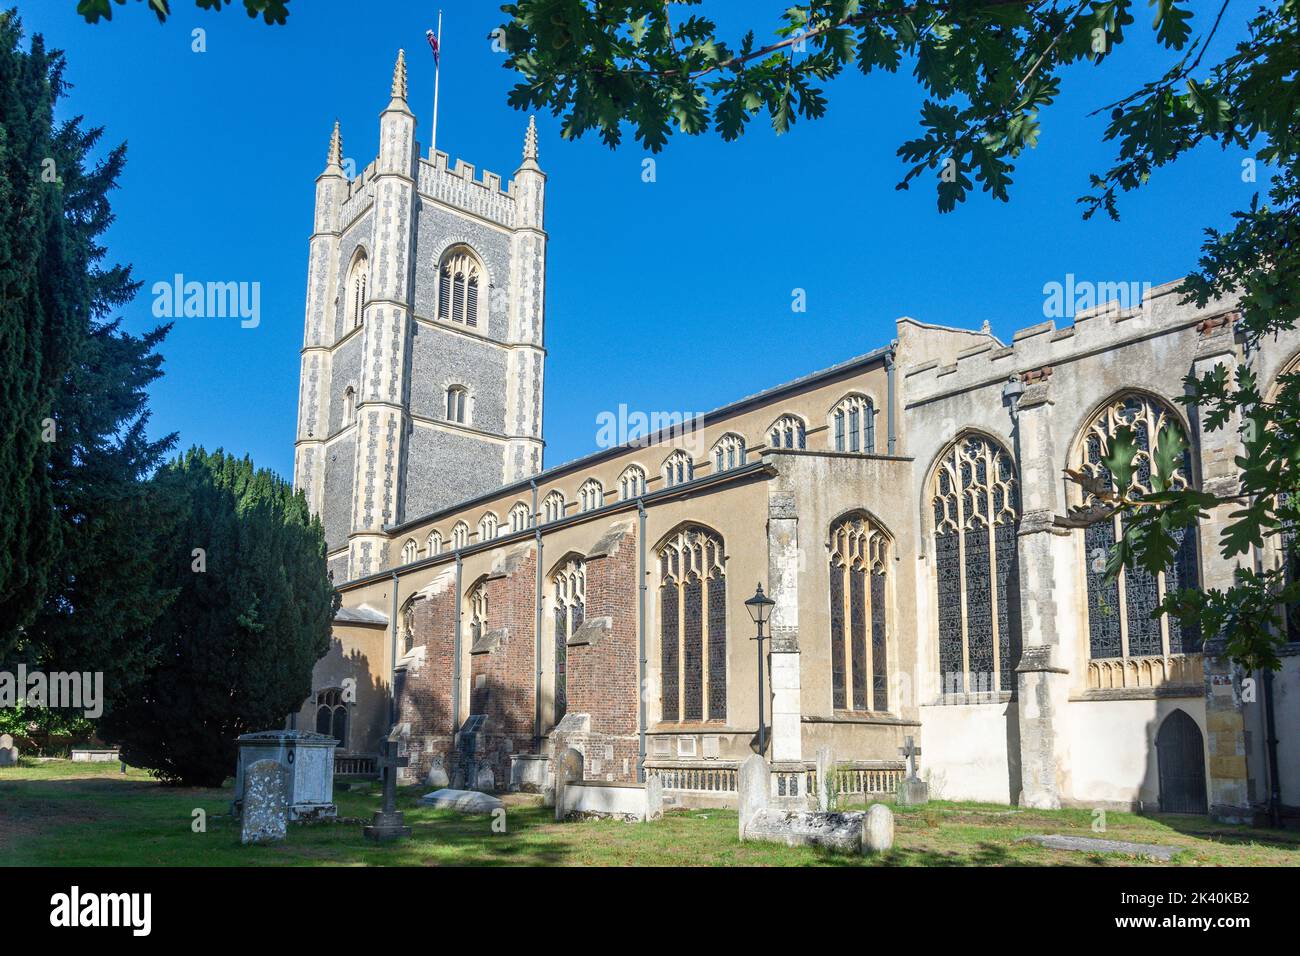 St Mary's Church, High Street, Dedham, Essex, England, United Kingdom Stock Photo